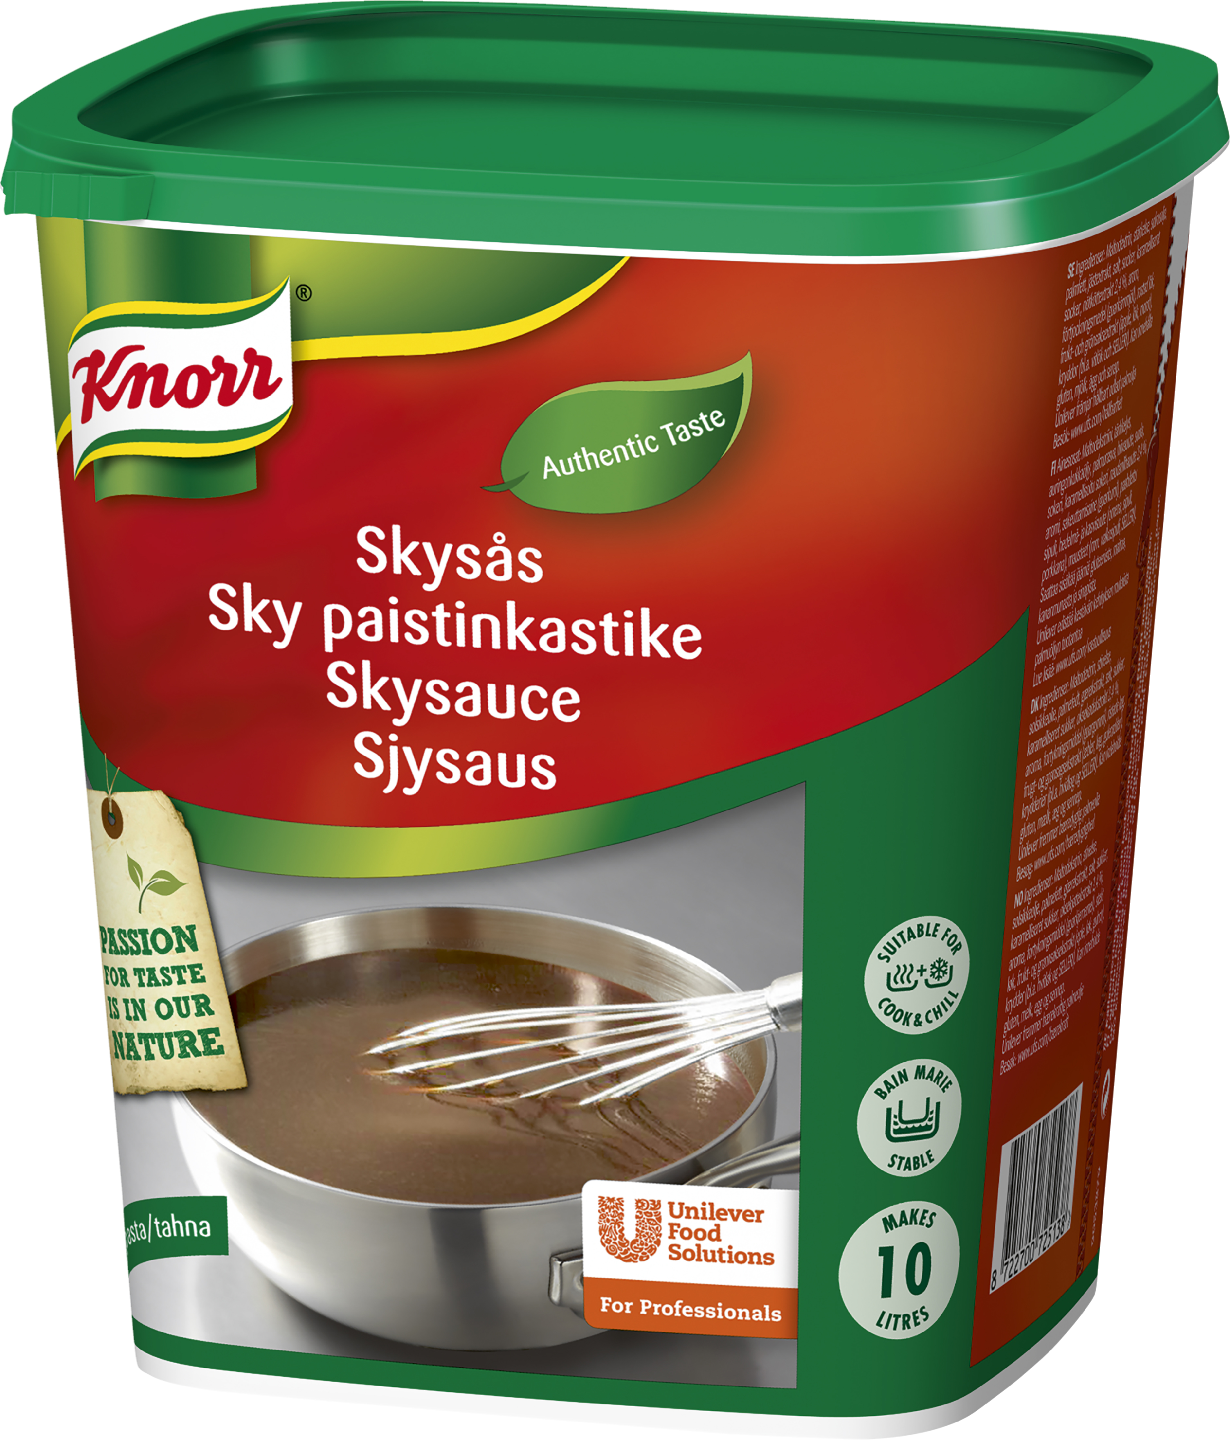 Knorr Sky paistinkastike tahna 1kg